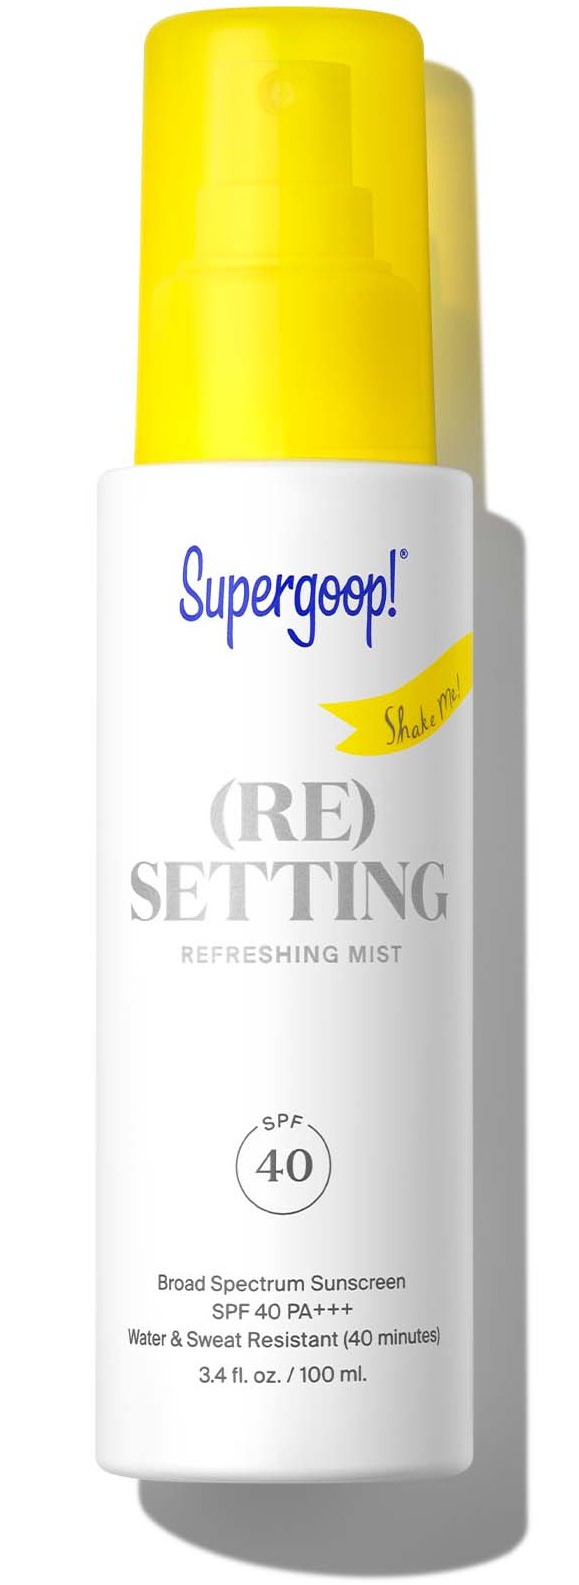 Supergoop! (re)setting Refreshing Mist